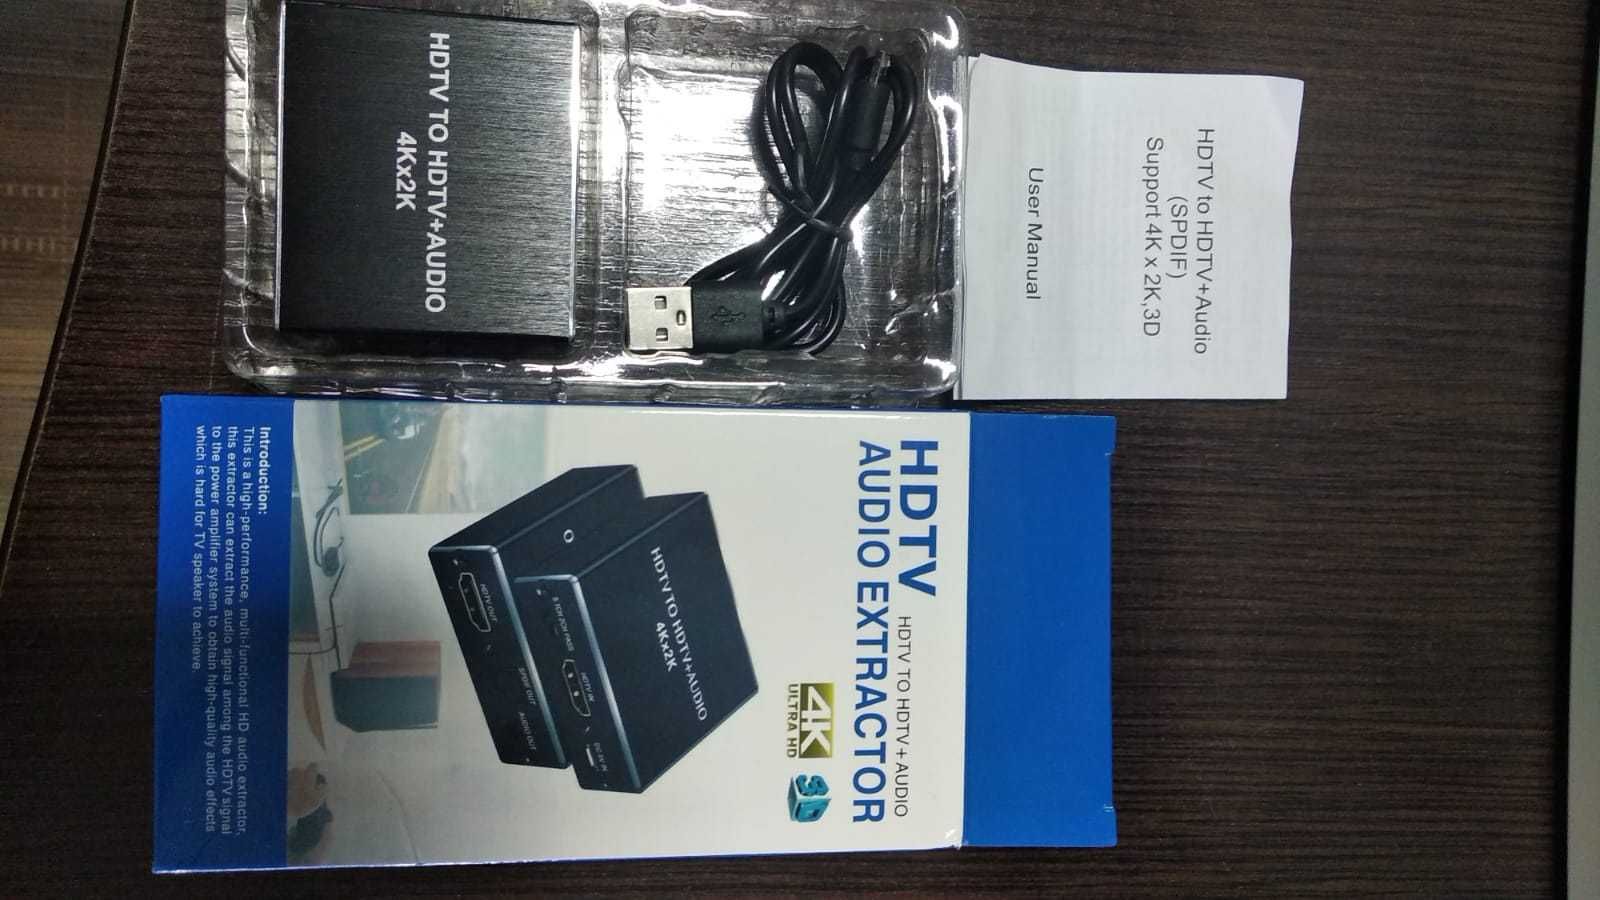 Аудиоконвертер HDMI to HDMI + audio